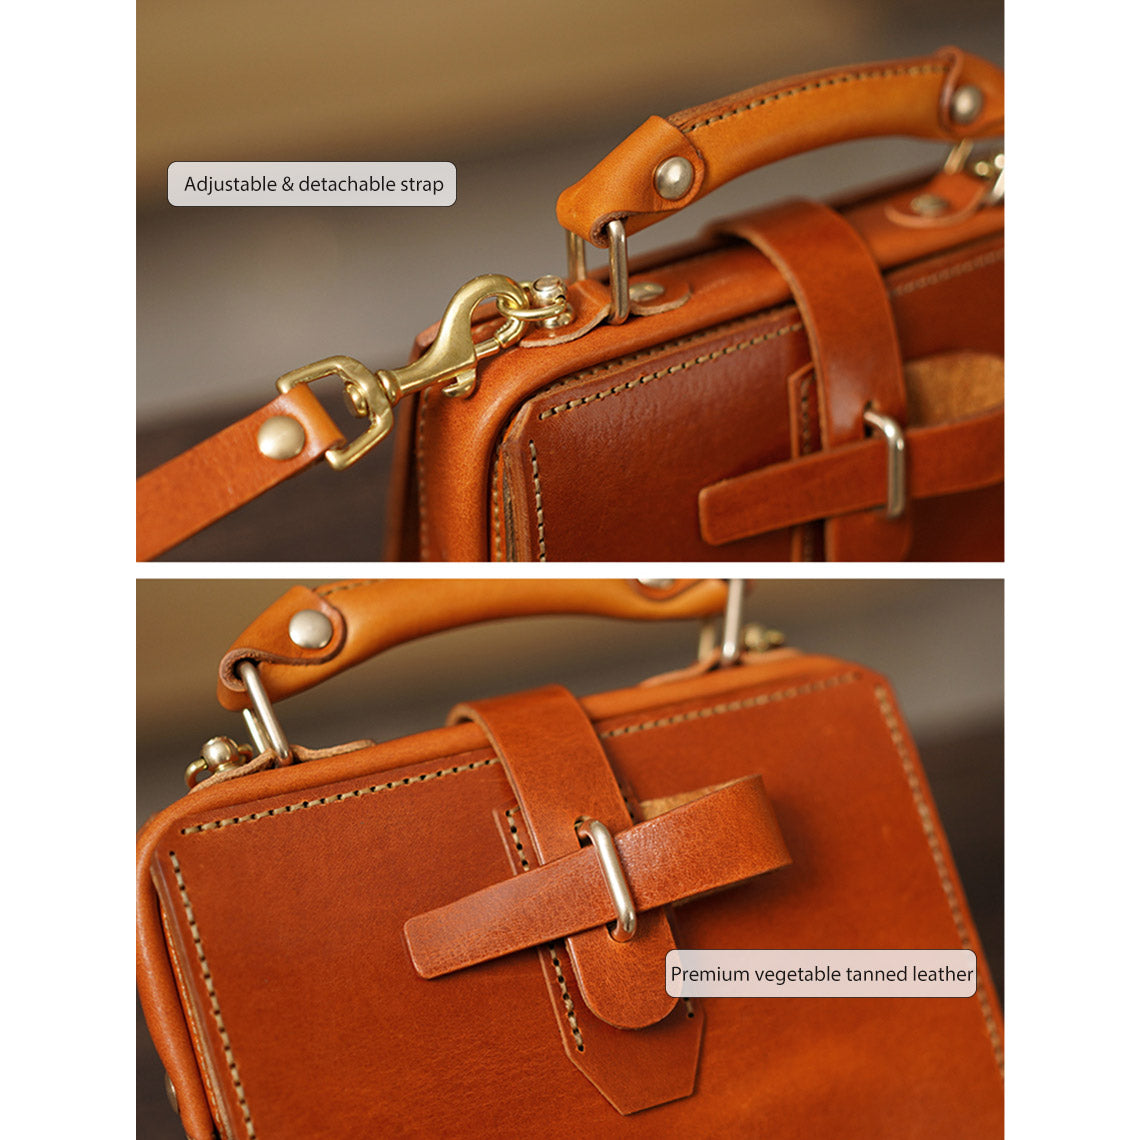 Details for the Leather Handbag Making Kits - POPSEWING®